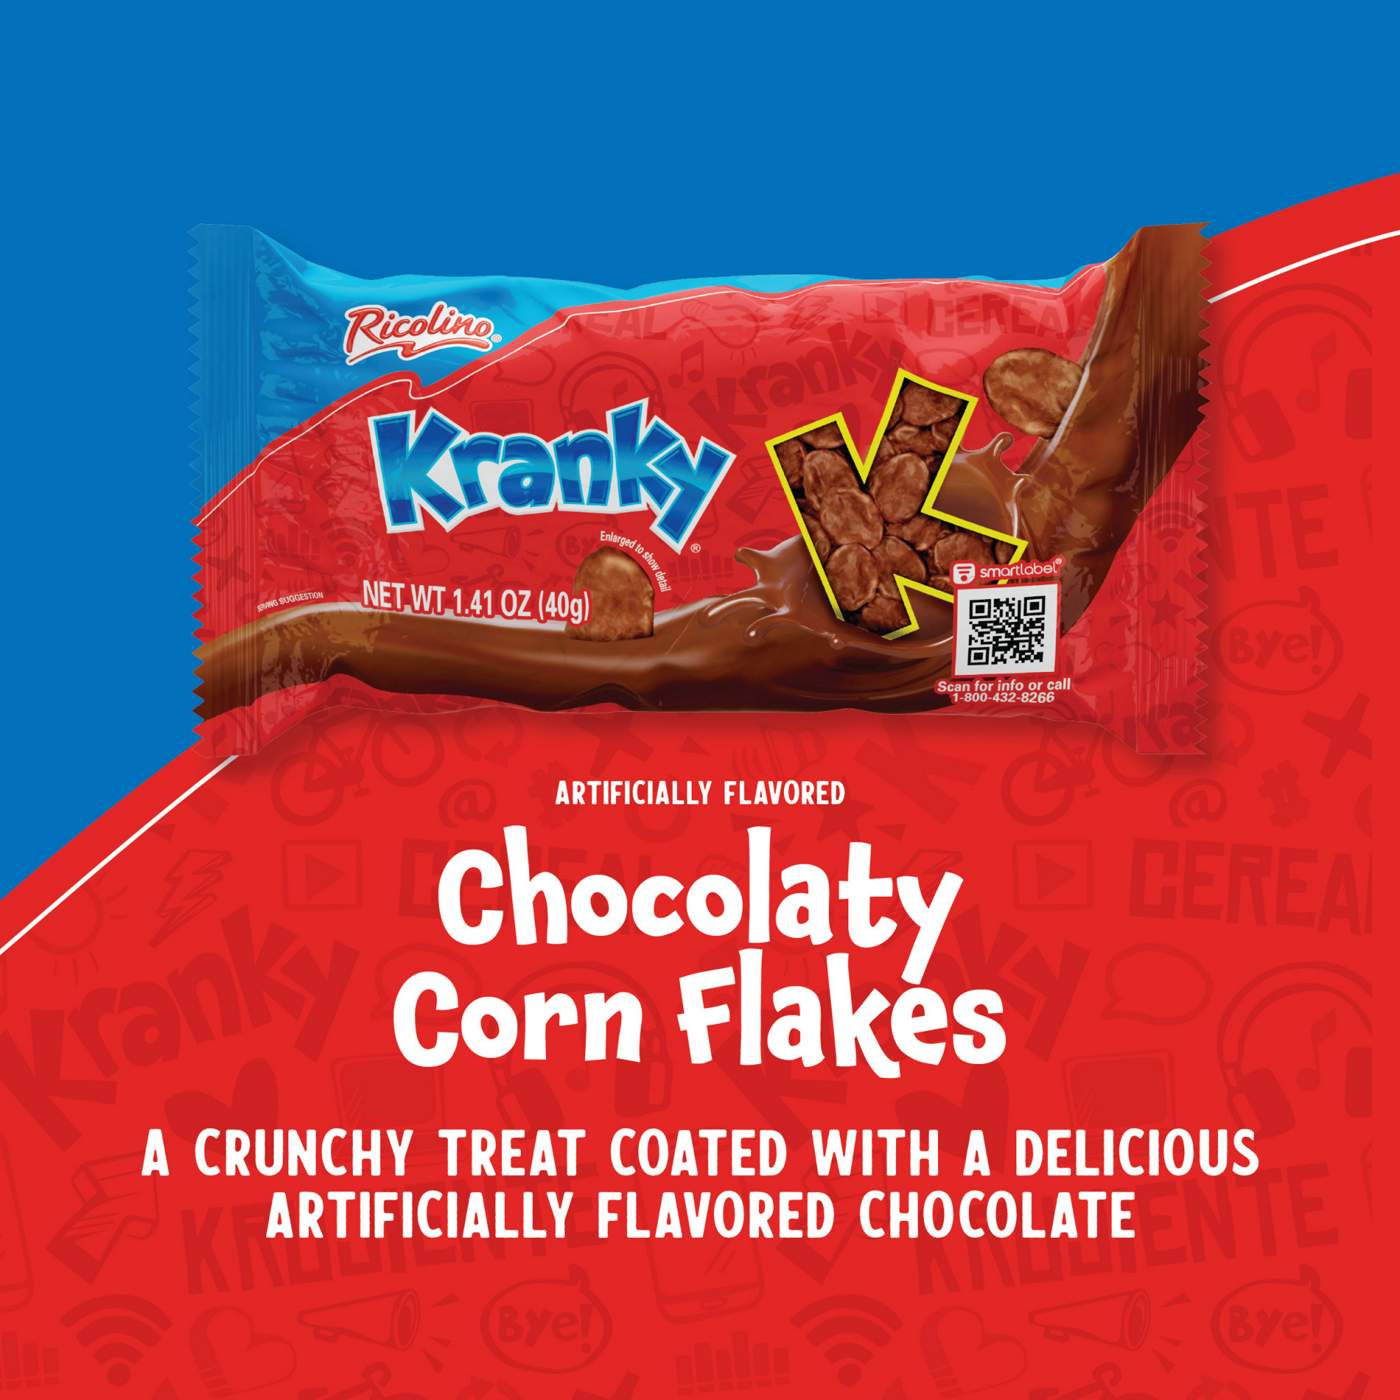 Ricolino Kranky Chocolate Covered Corn Flakes; image 6 of 6